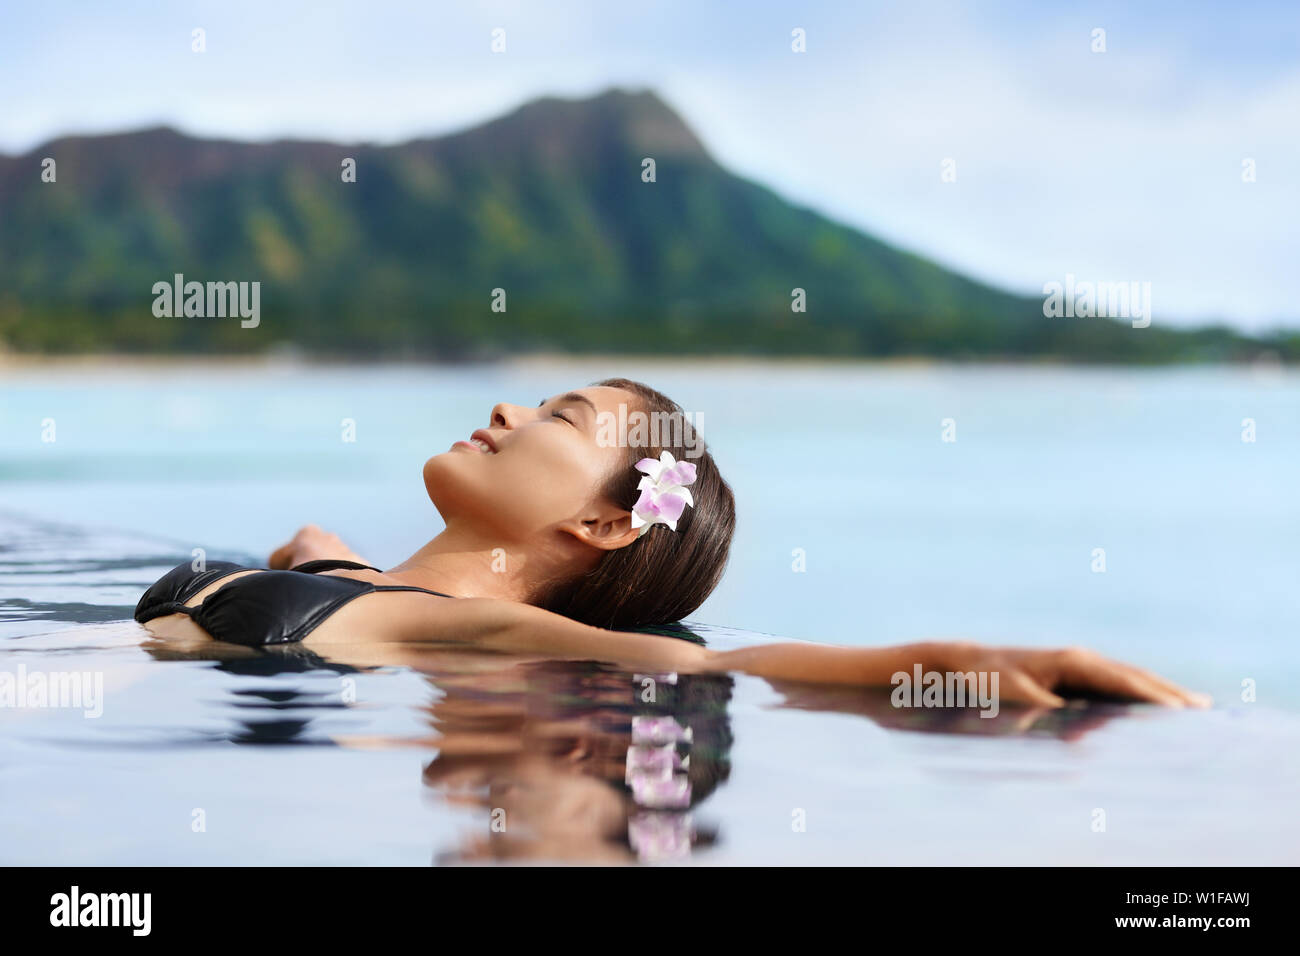 Hawaii vacation wellness pool spa woman relaxing in warm water at luxury hotel resort. Young adult at Waikiki beach in Honolulu, Oahu, Hawaii, USA. Stock Photo